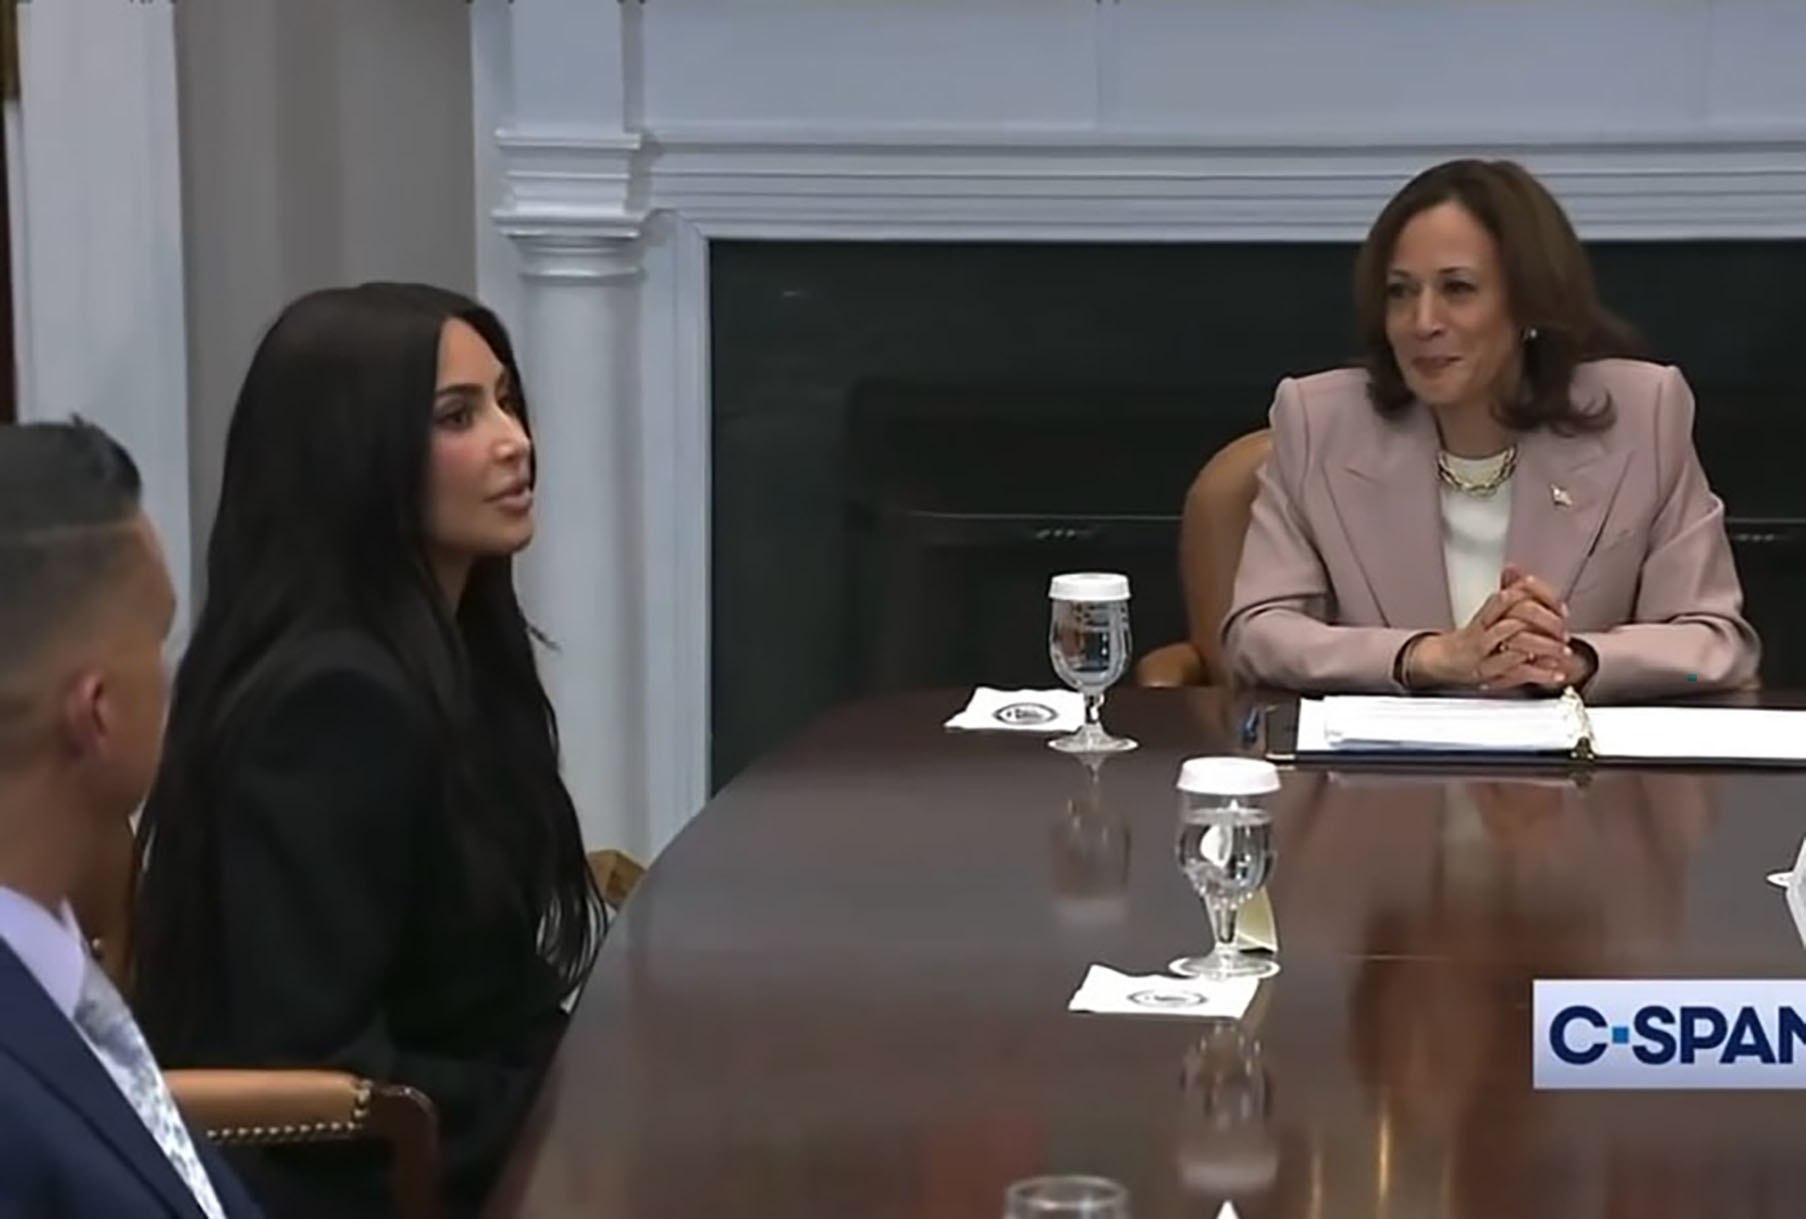 Kim spoke with Vice President Harris about criminal reform